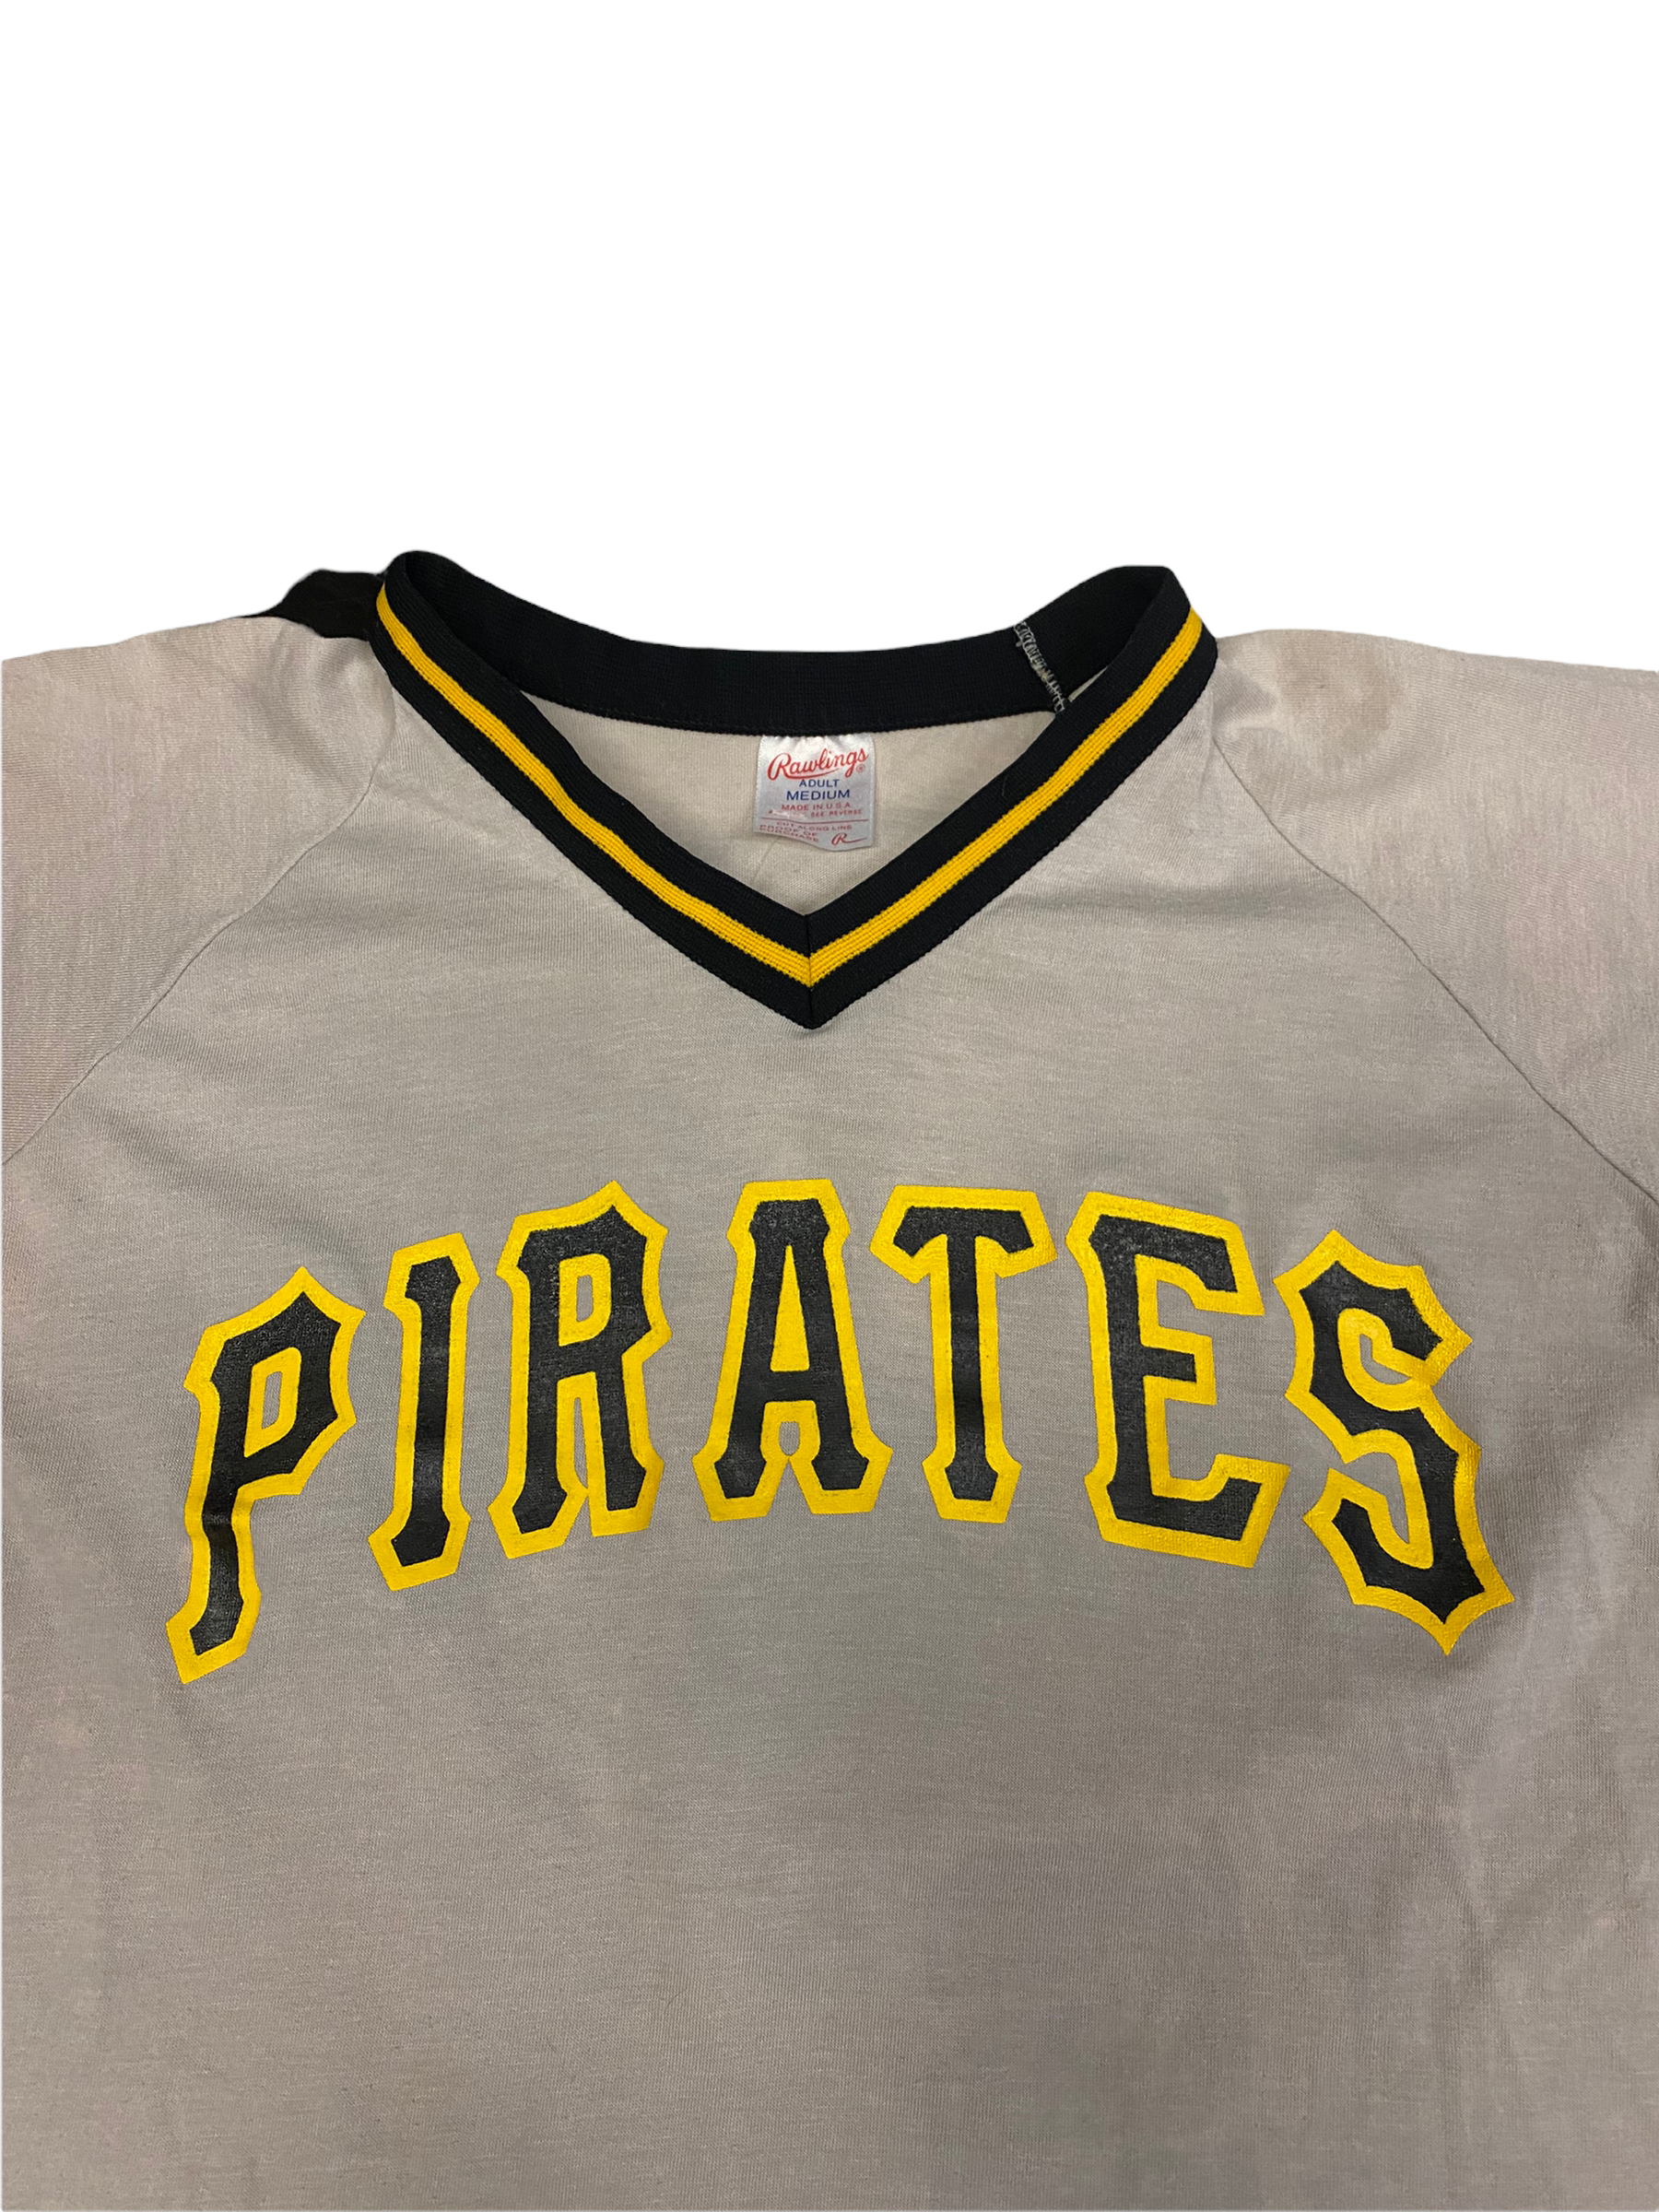 Vintage Pittsburgh Pirates Jersey Size Large 1990s -  Ireland